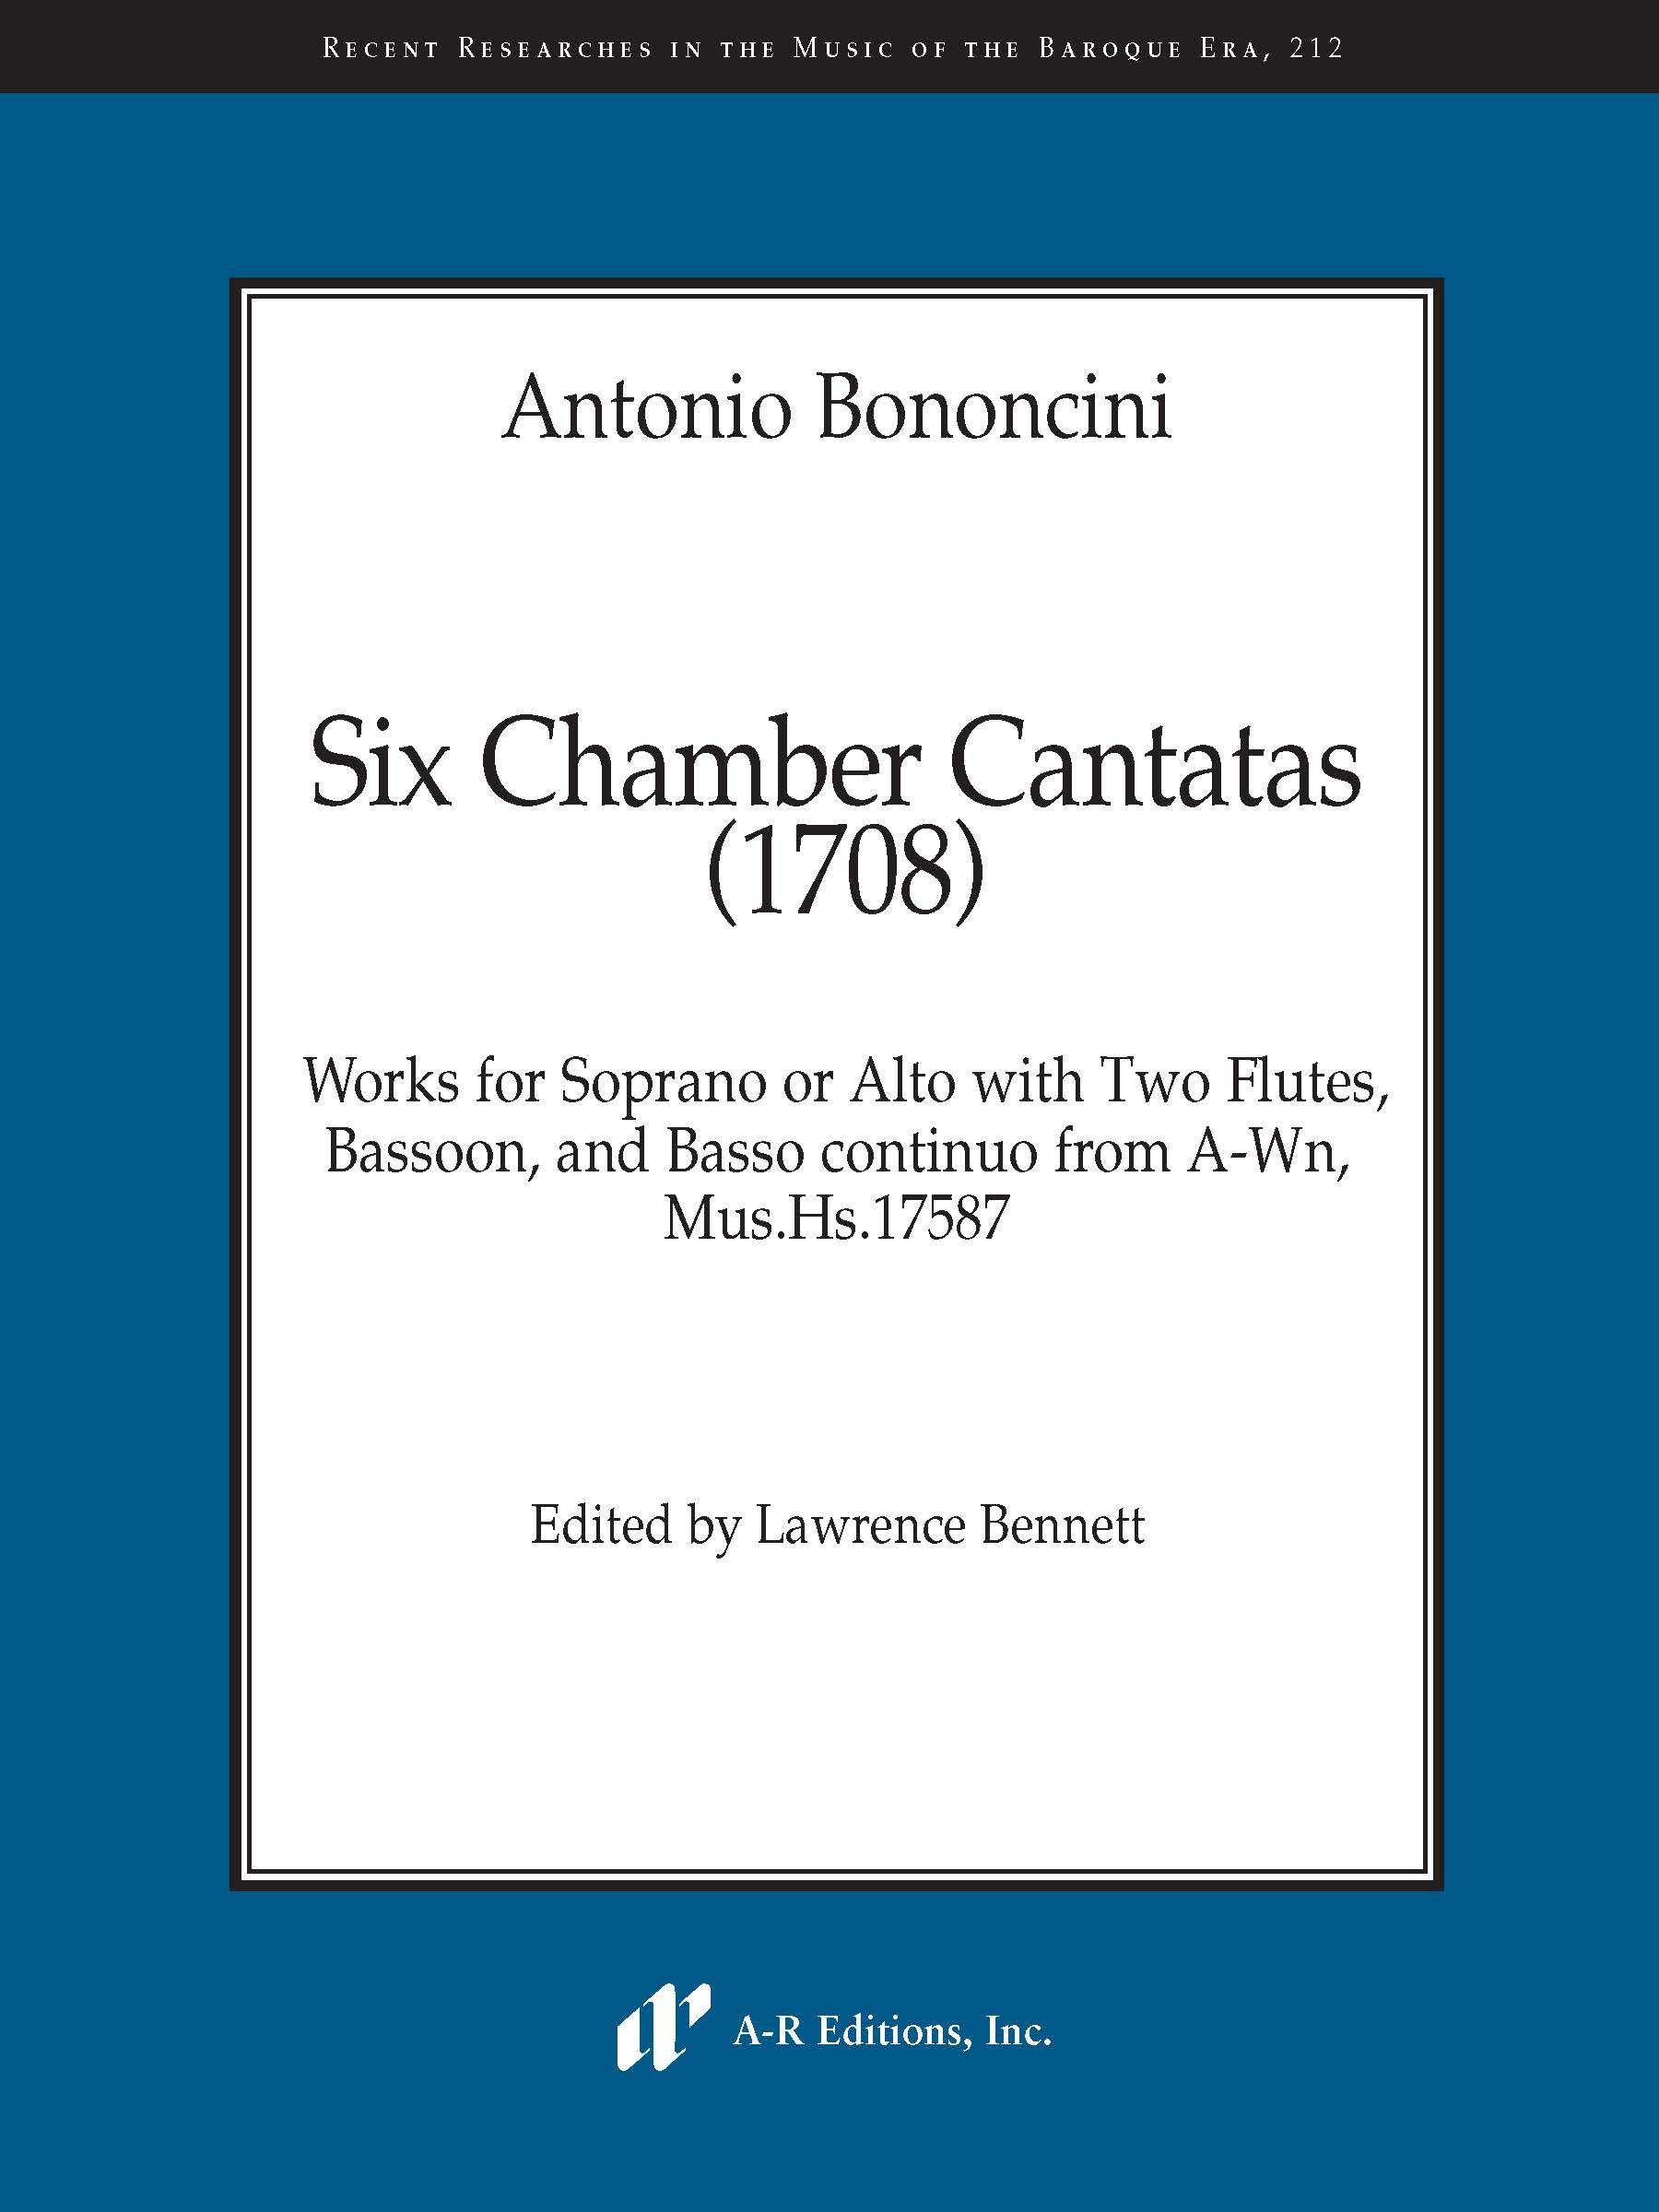 Antonio Bononcini Six Chamber Cantatas (1708) RRMBE 212